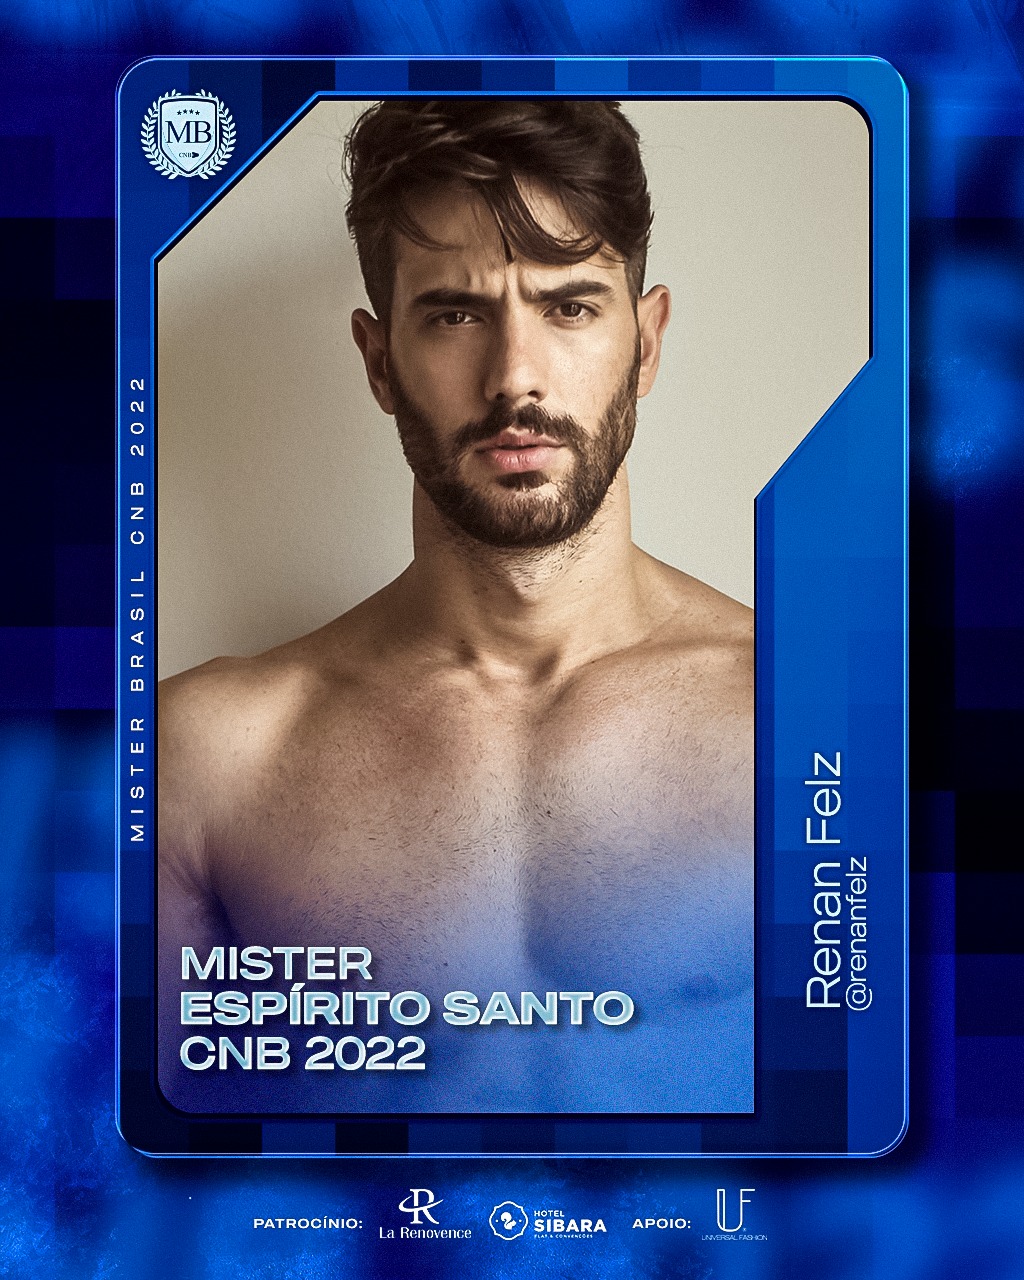 Mister Brasil CNB 2022 is Mister Caminhos do Contestado - Page 3 27910411